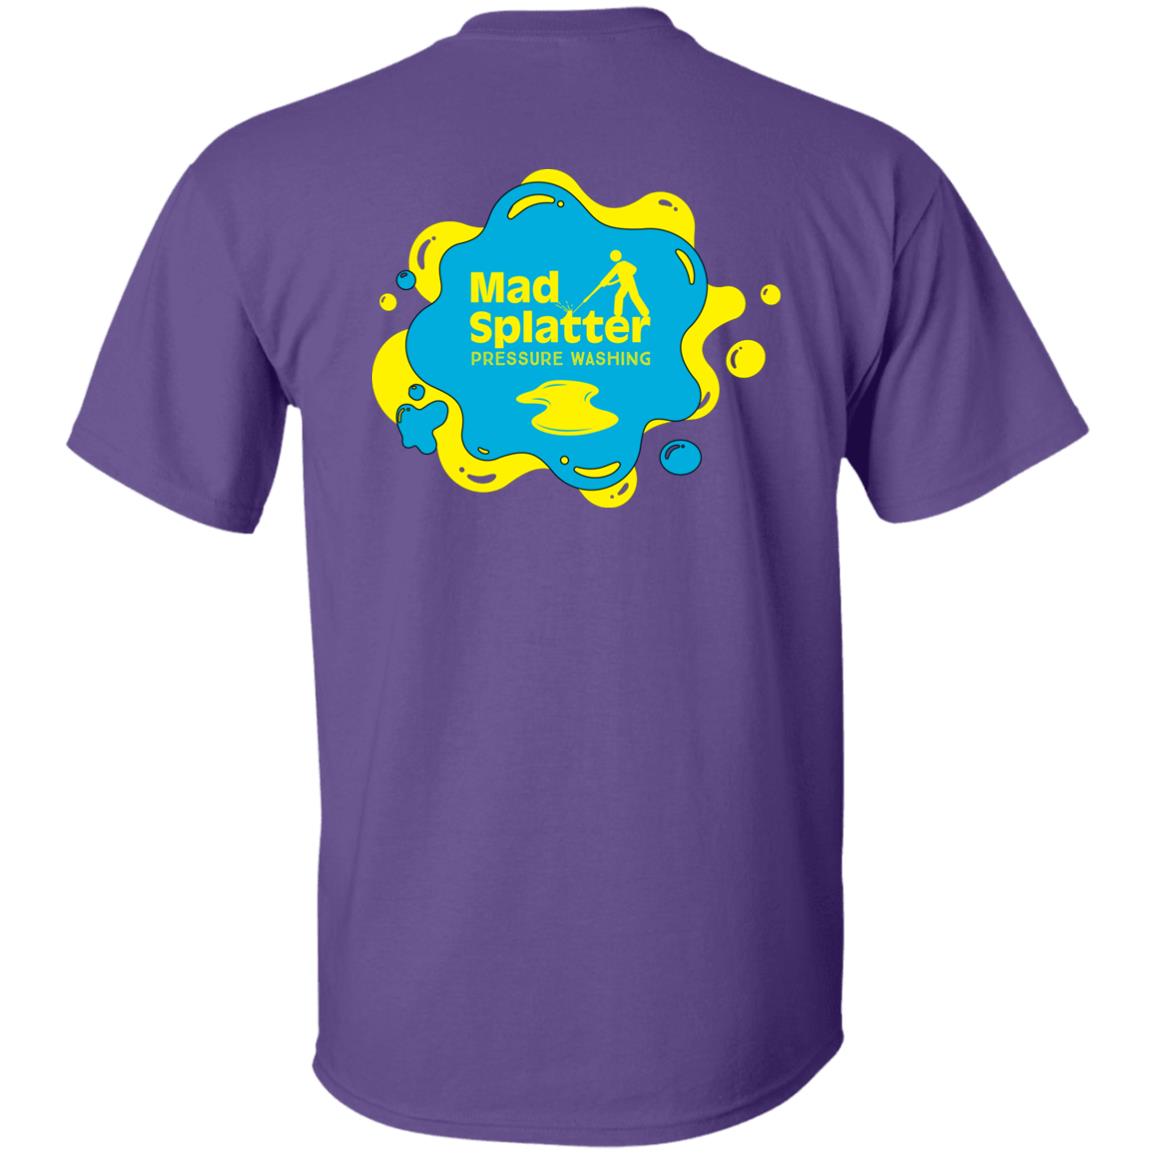 Mad Splatter YellowAndBlue Mid Logo Trans G500 5.3 oz. T-Shirt